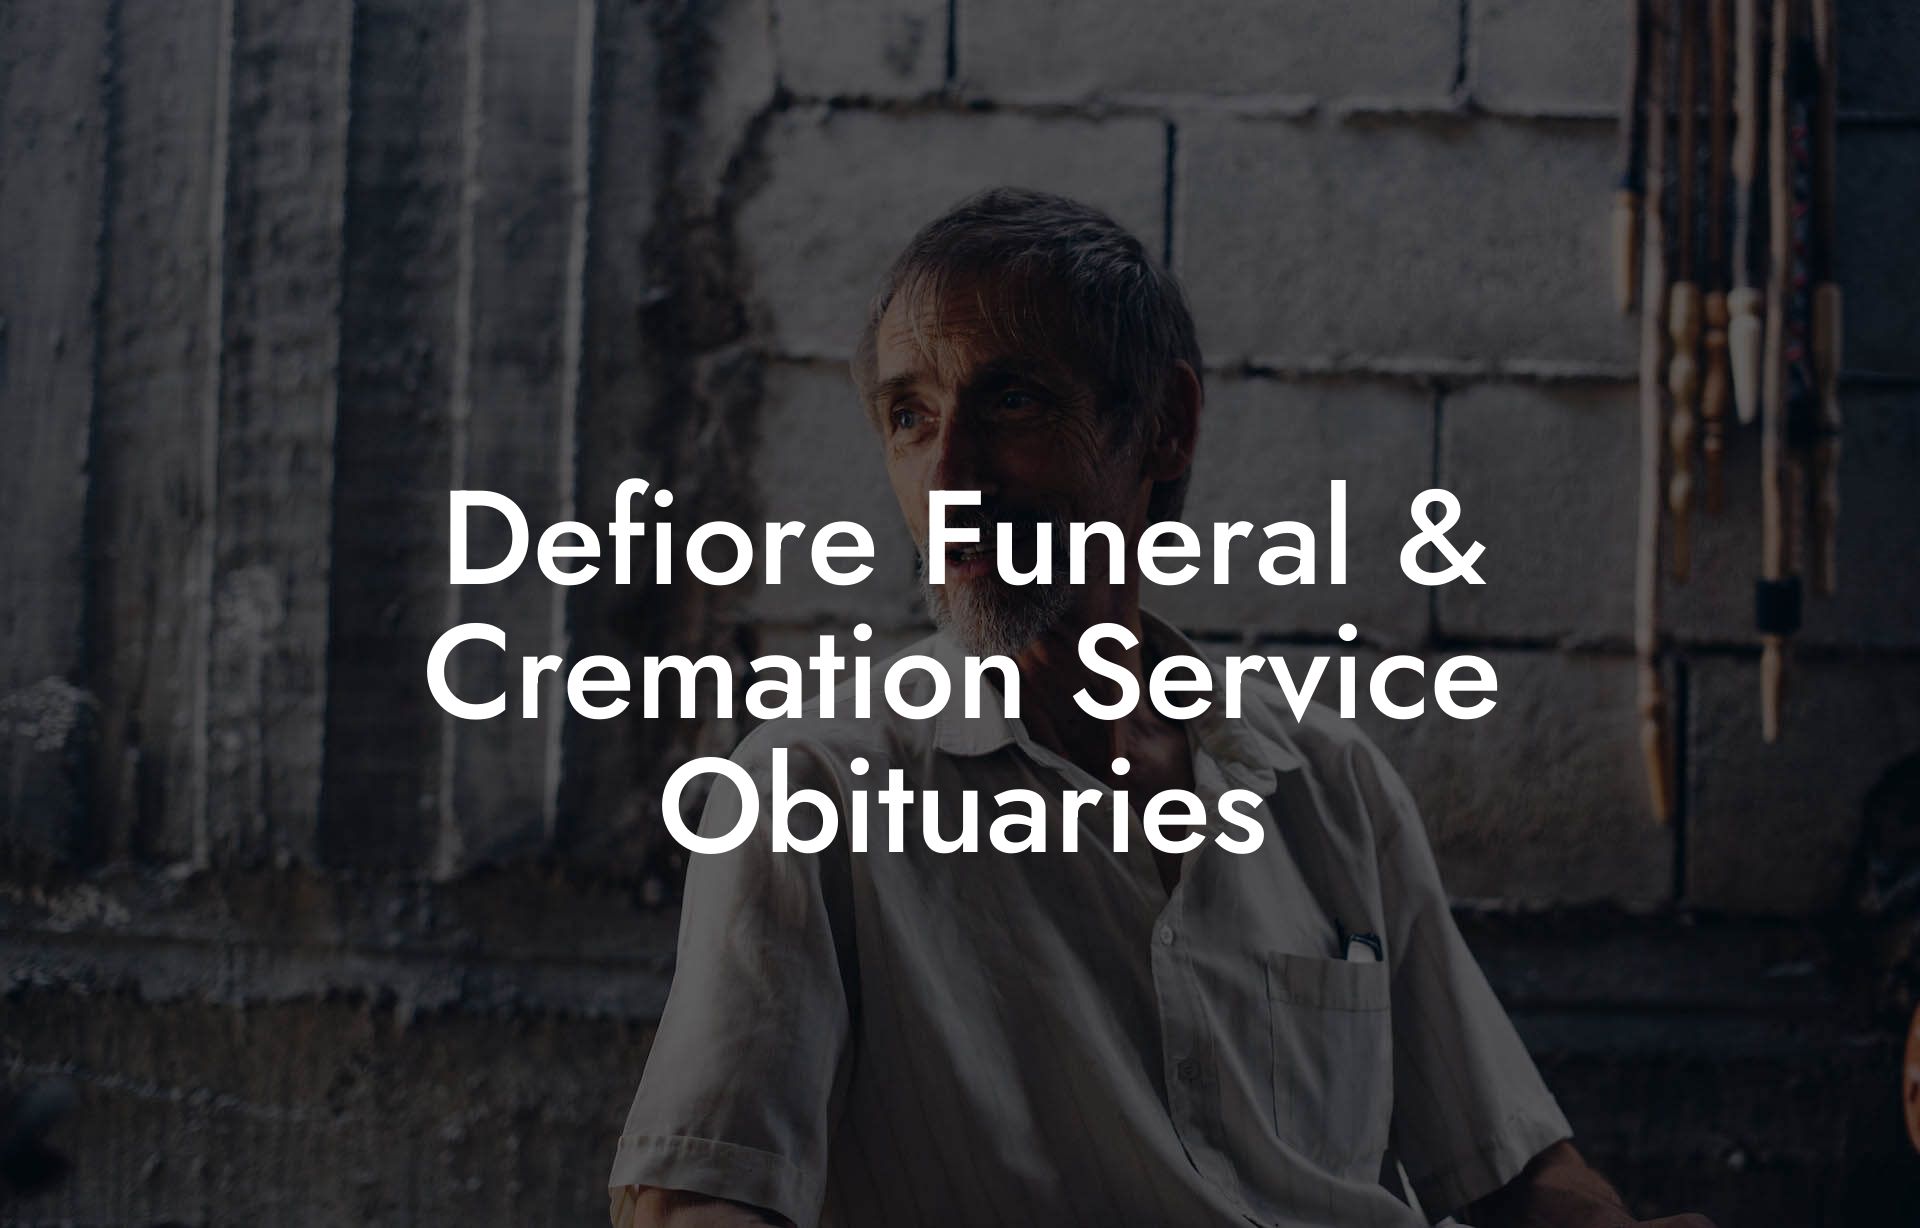 Defiore Funeral & Cremation Service Obituaries